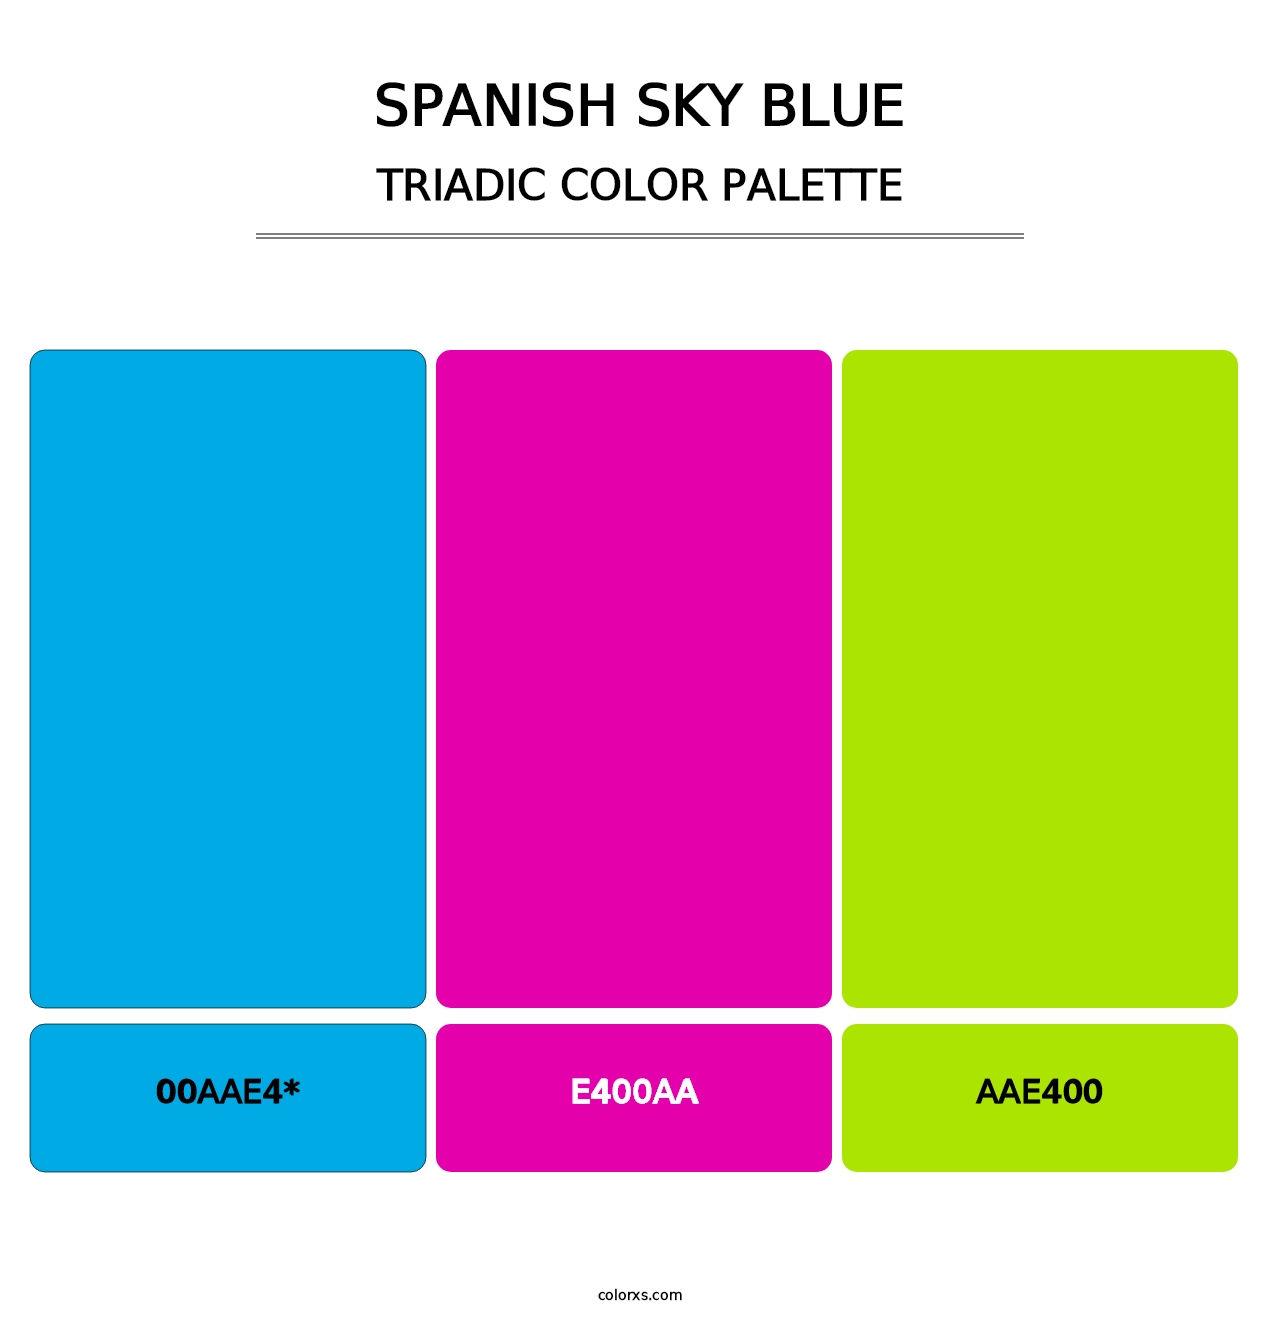 Spanish Sky Blue - Triadic Color Palette